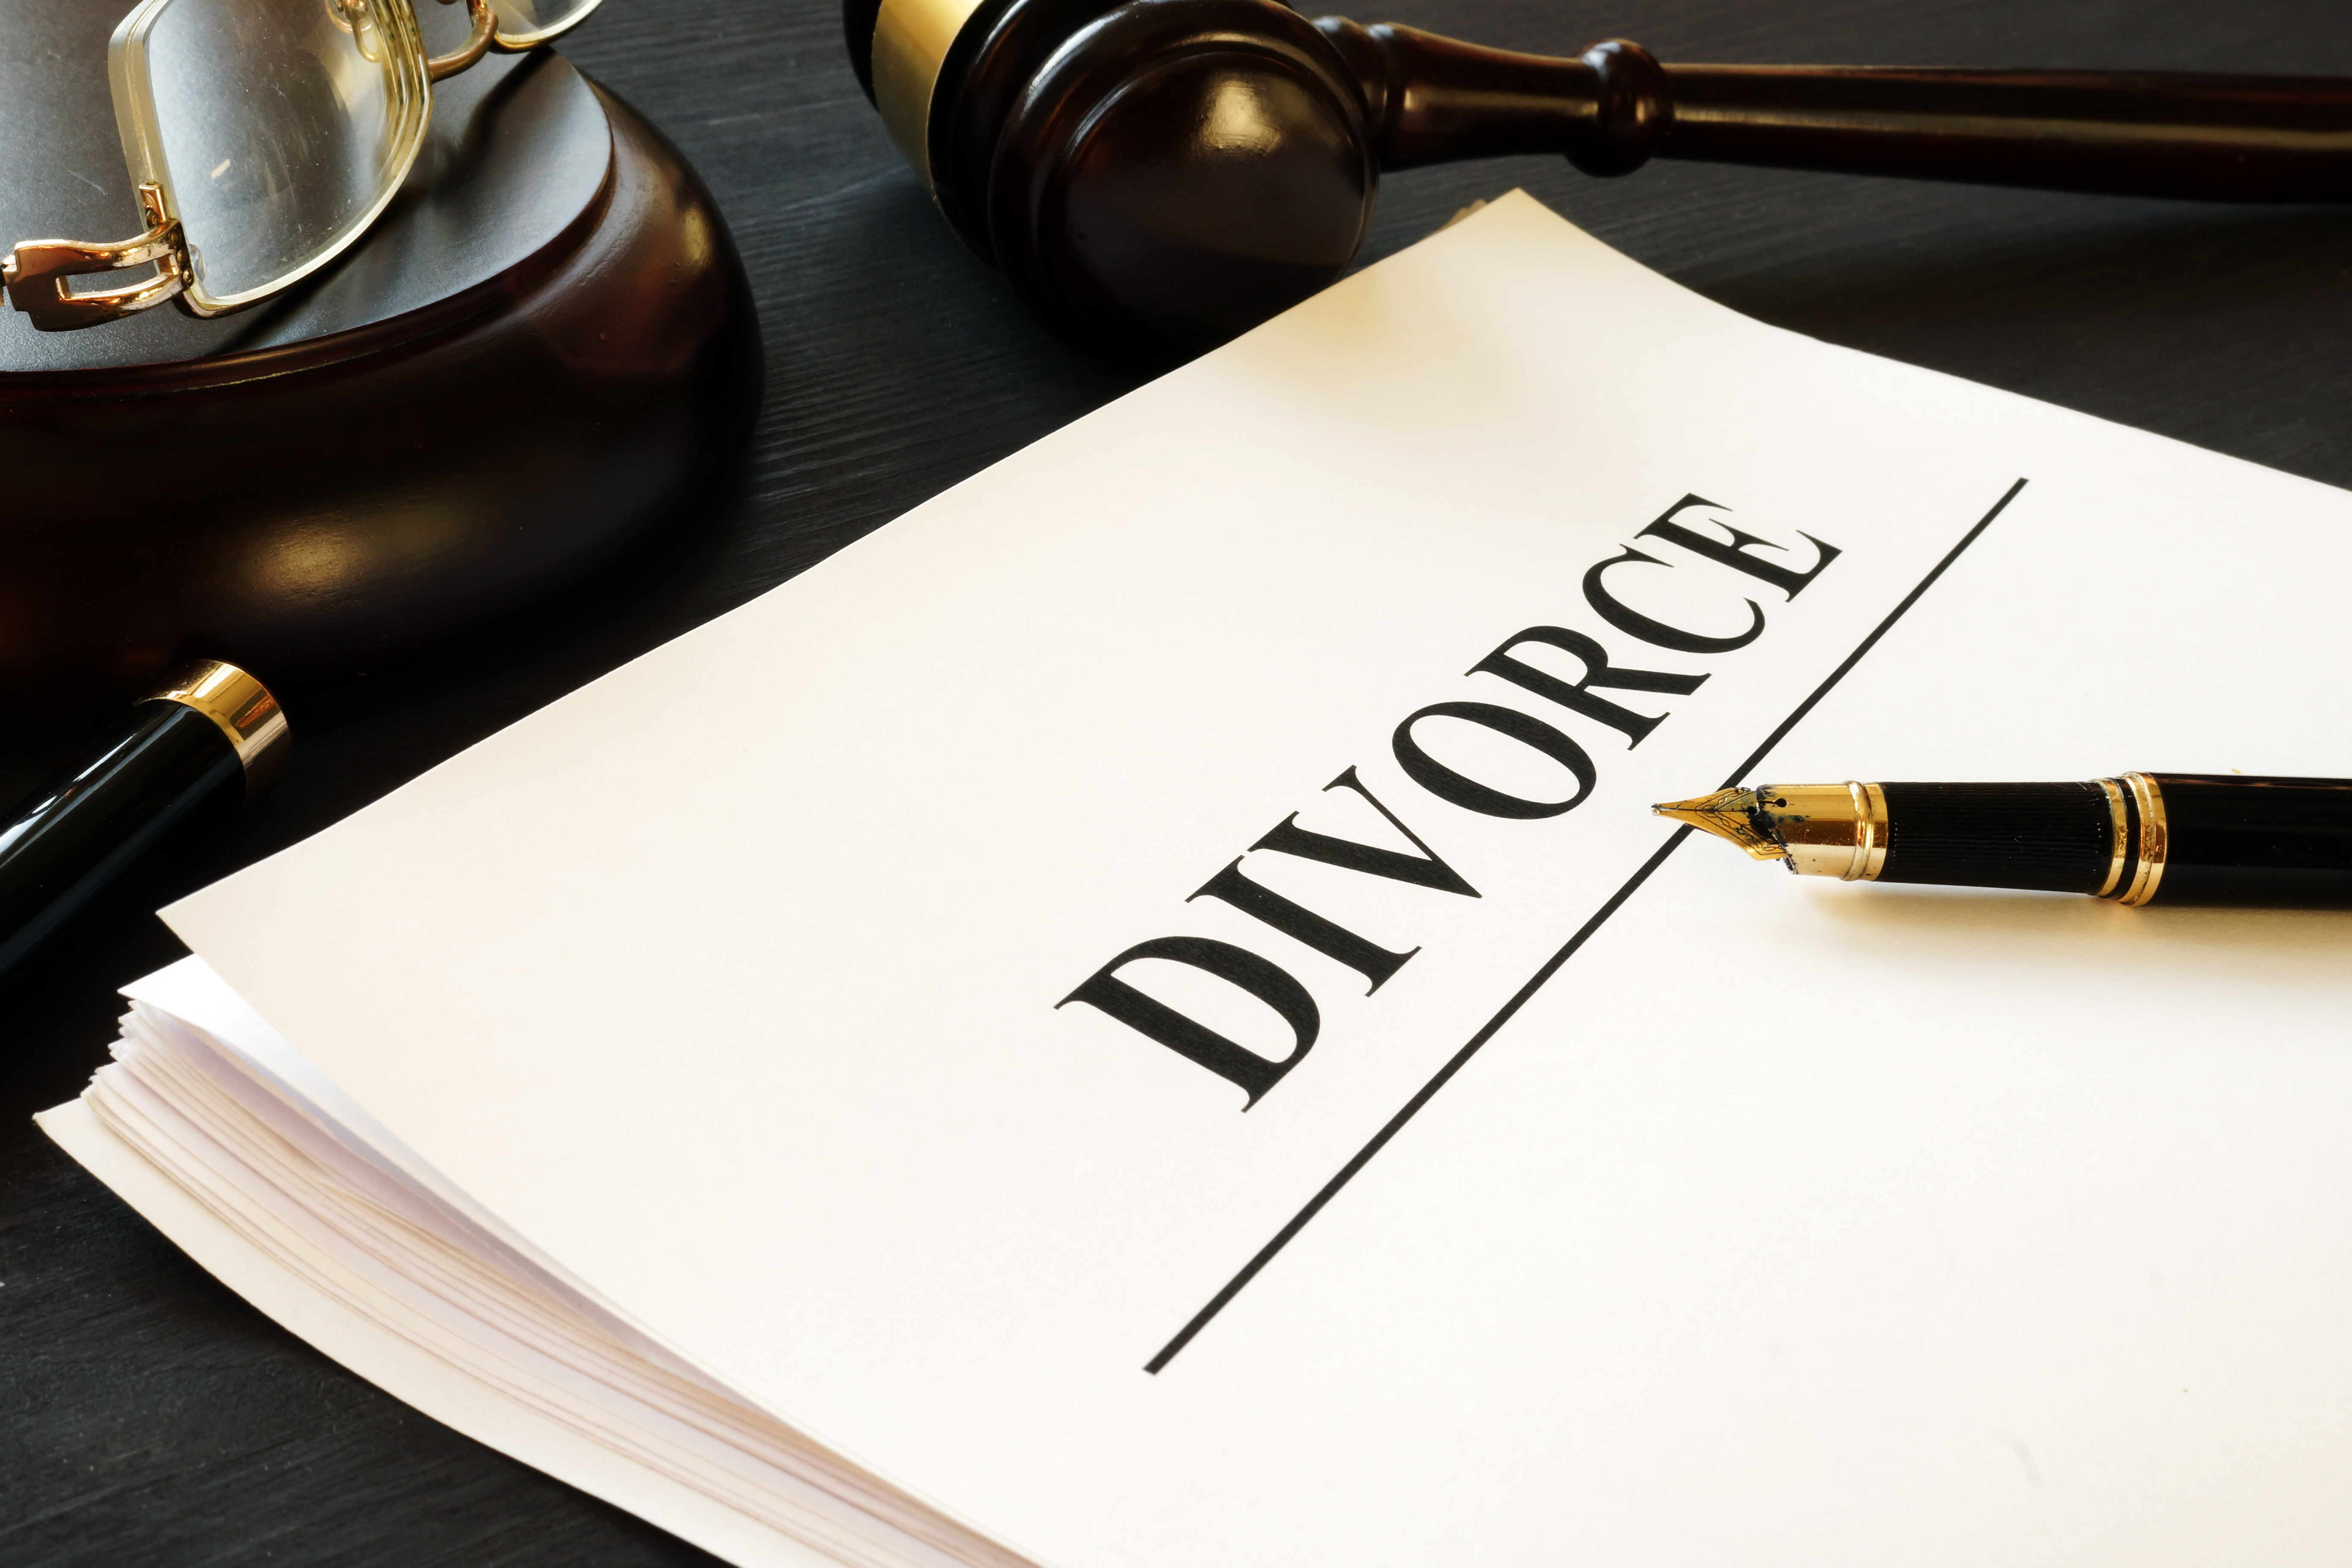 Divorzio e nuovi parametri